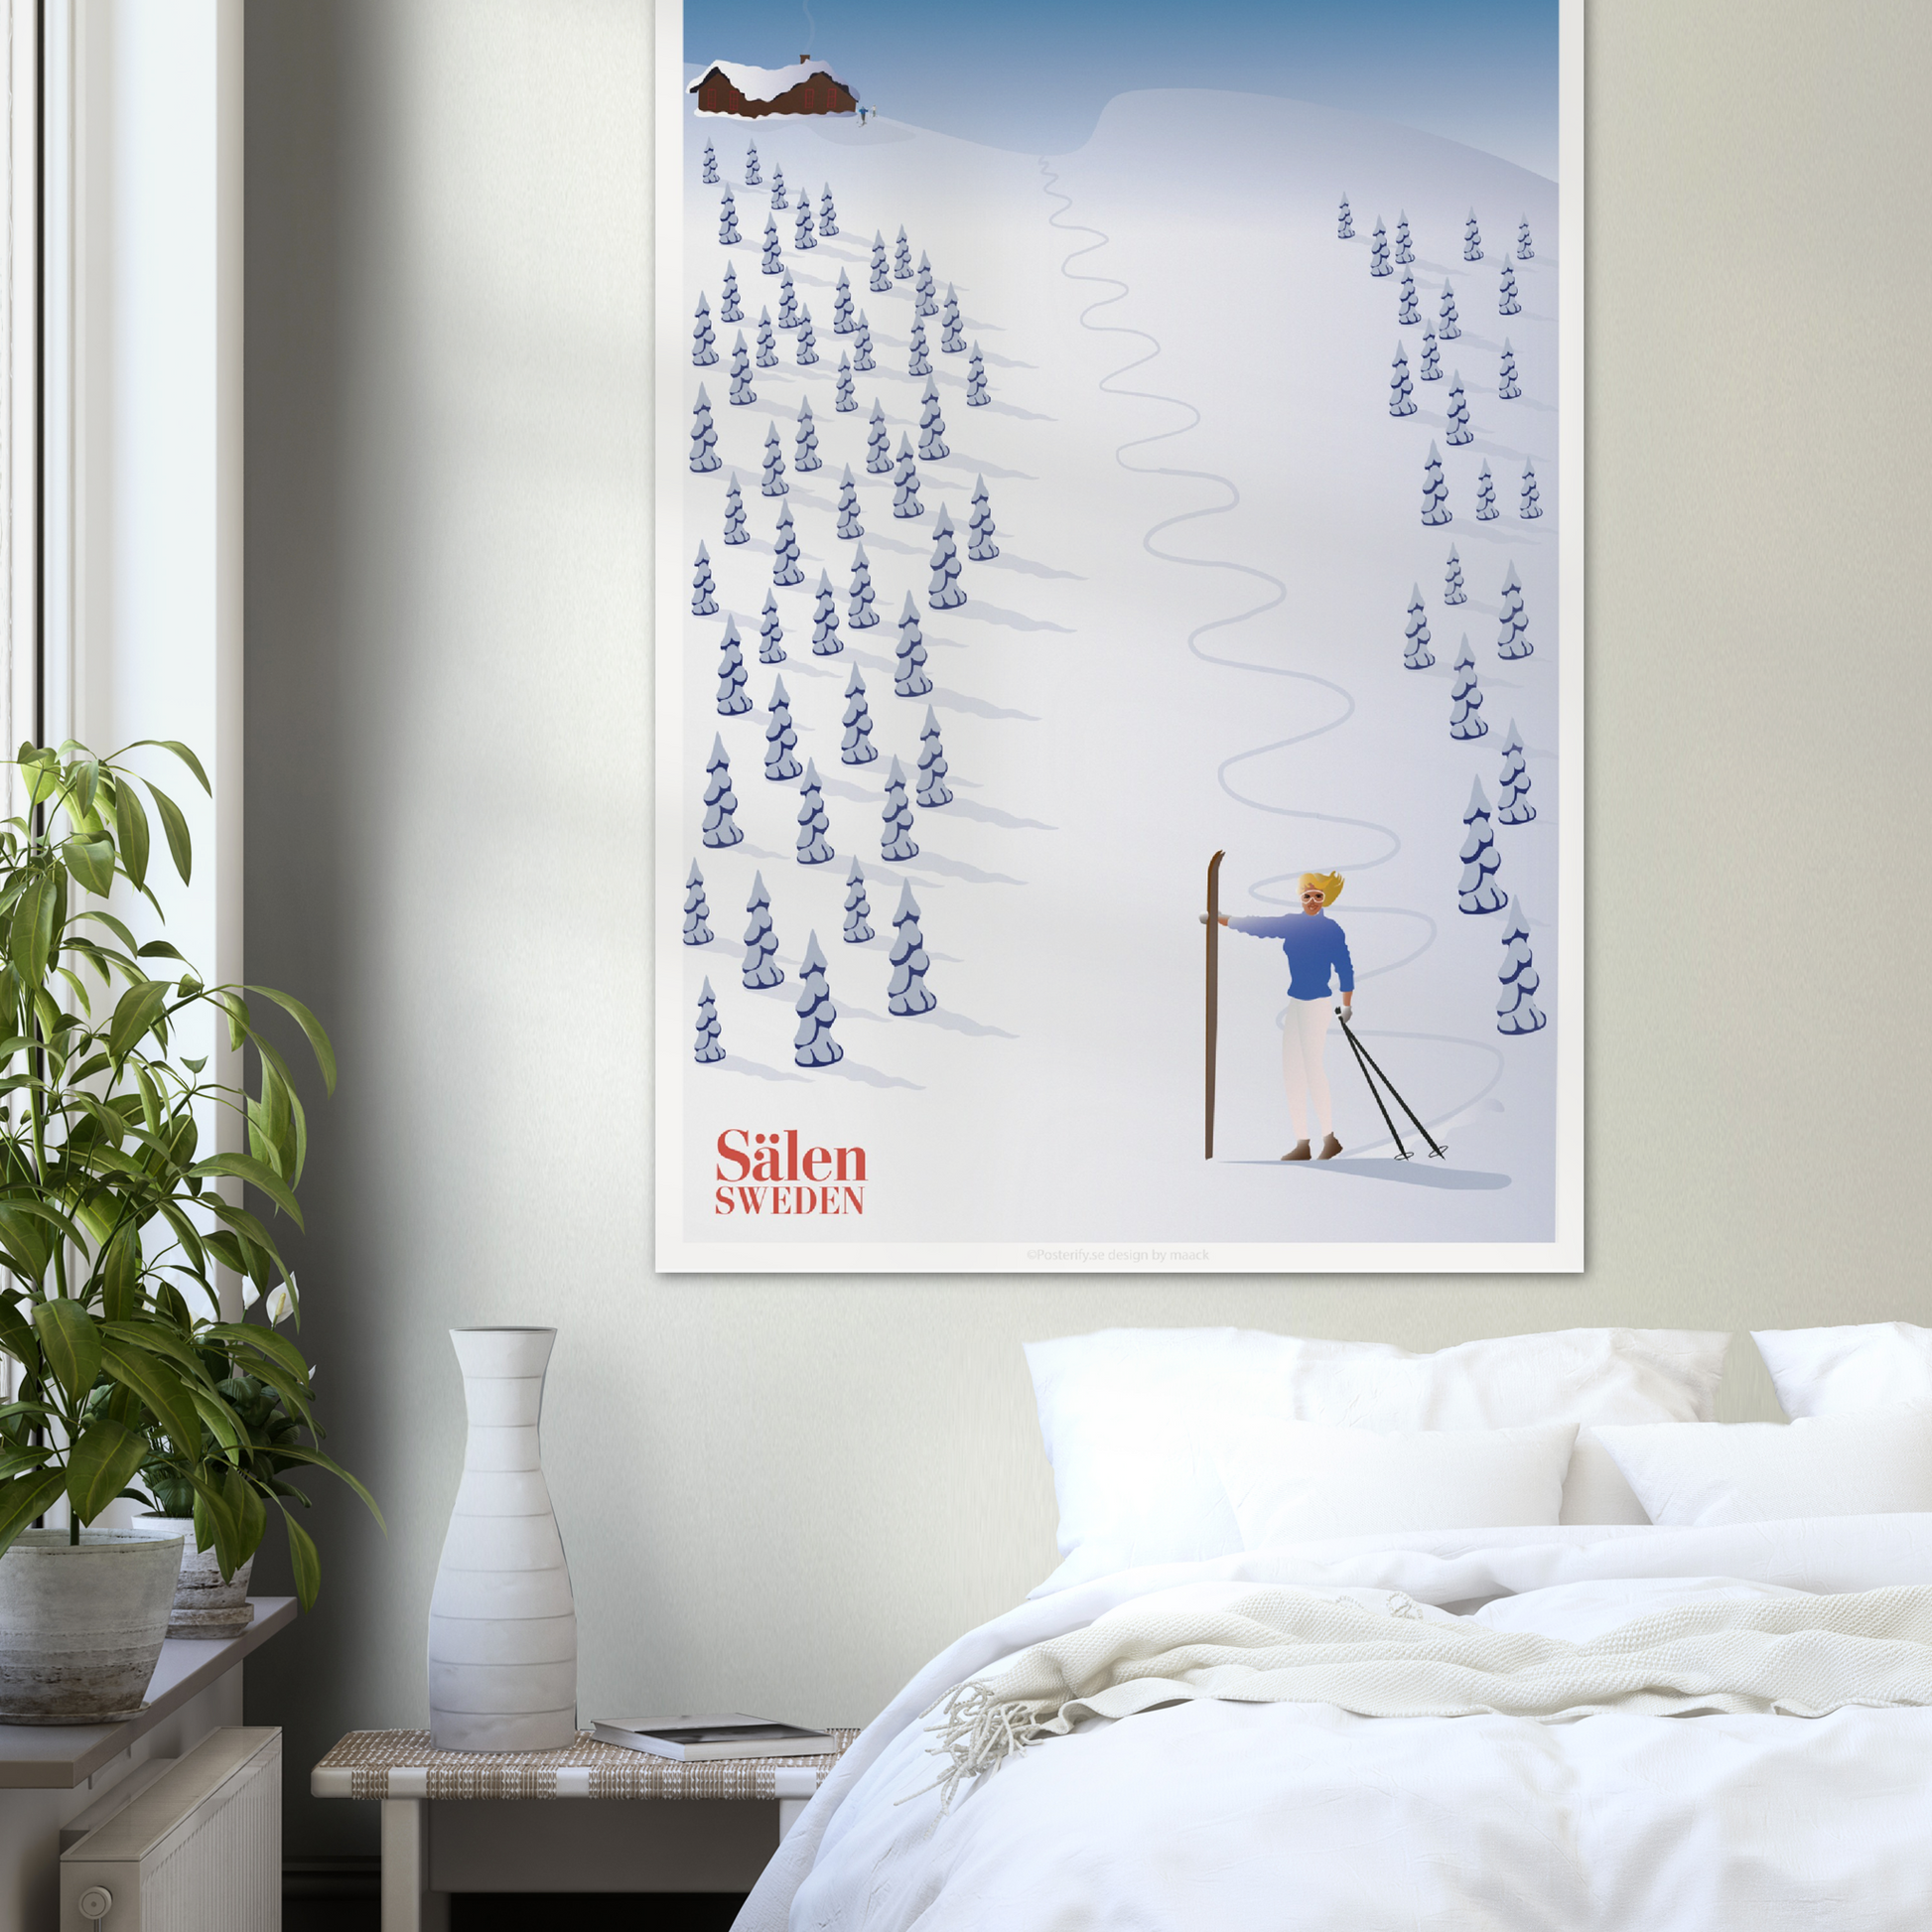 Sälen, Sweden, by Posterify Design, Poster Print on Premium Matte Paper - Posterify